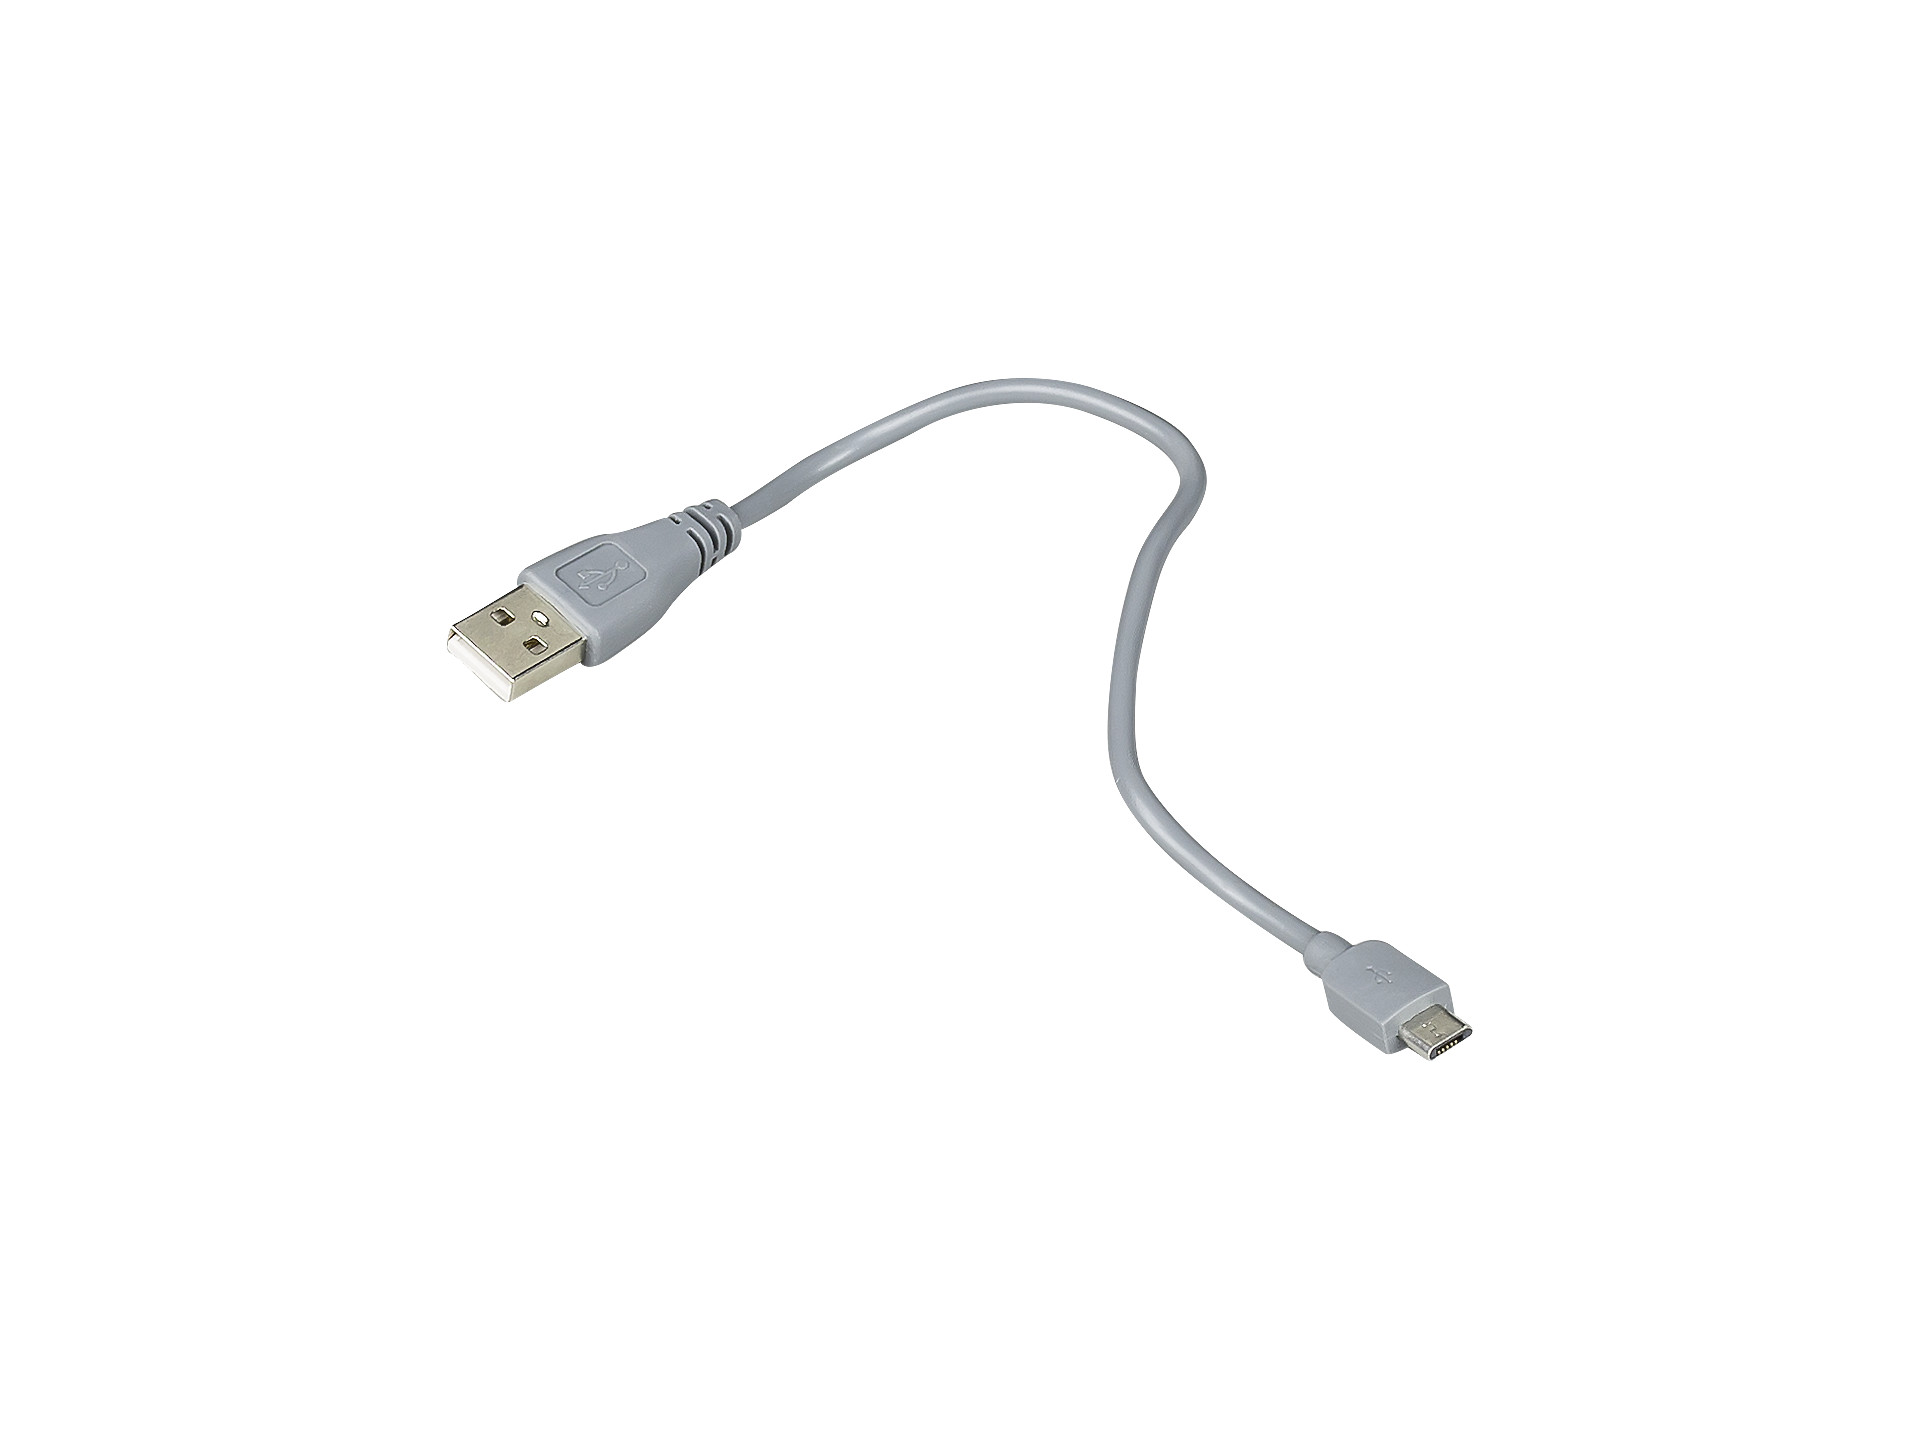 2m USB Black Charger Power Cable Adaptor for Exposure Joystick MK5 Bike Light 